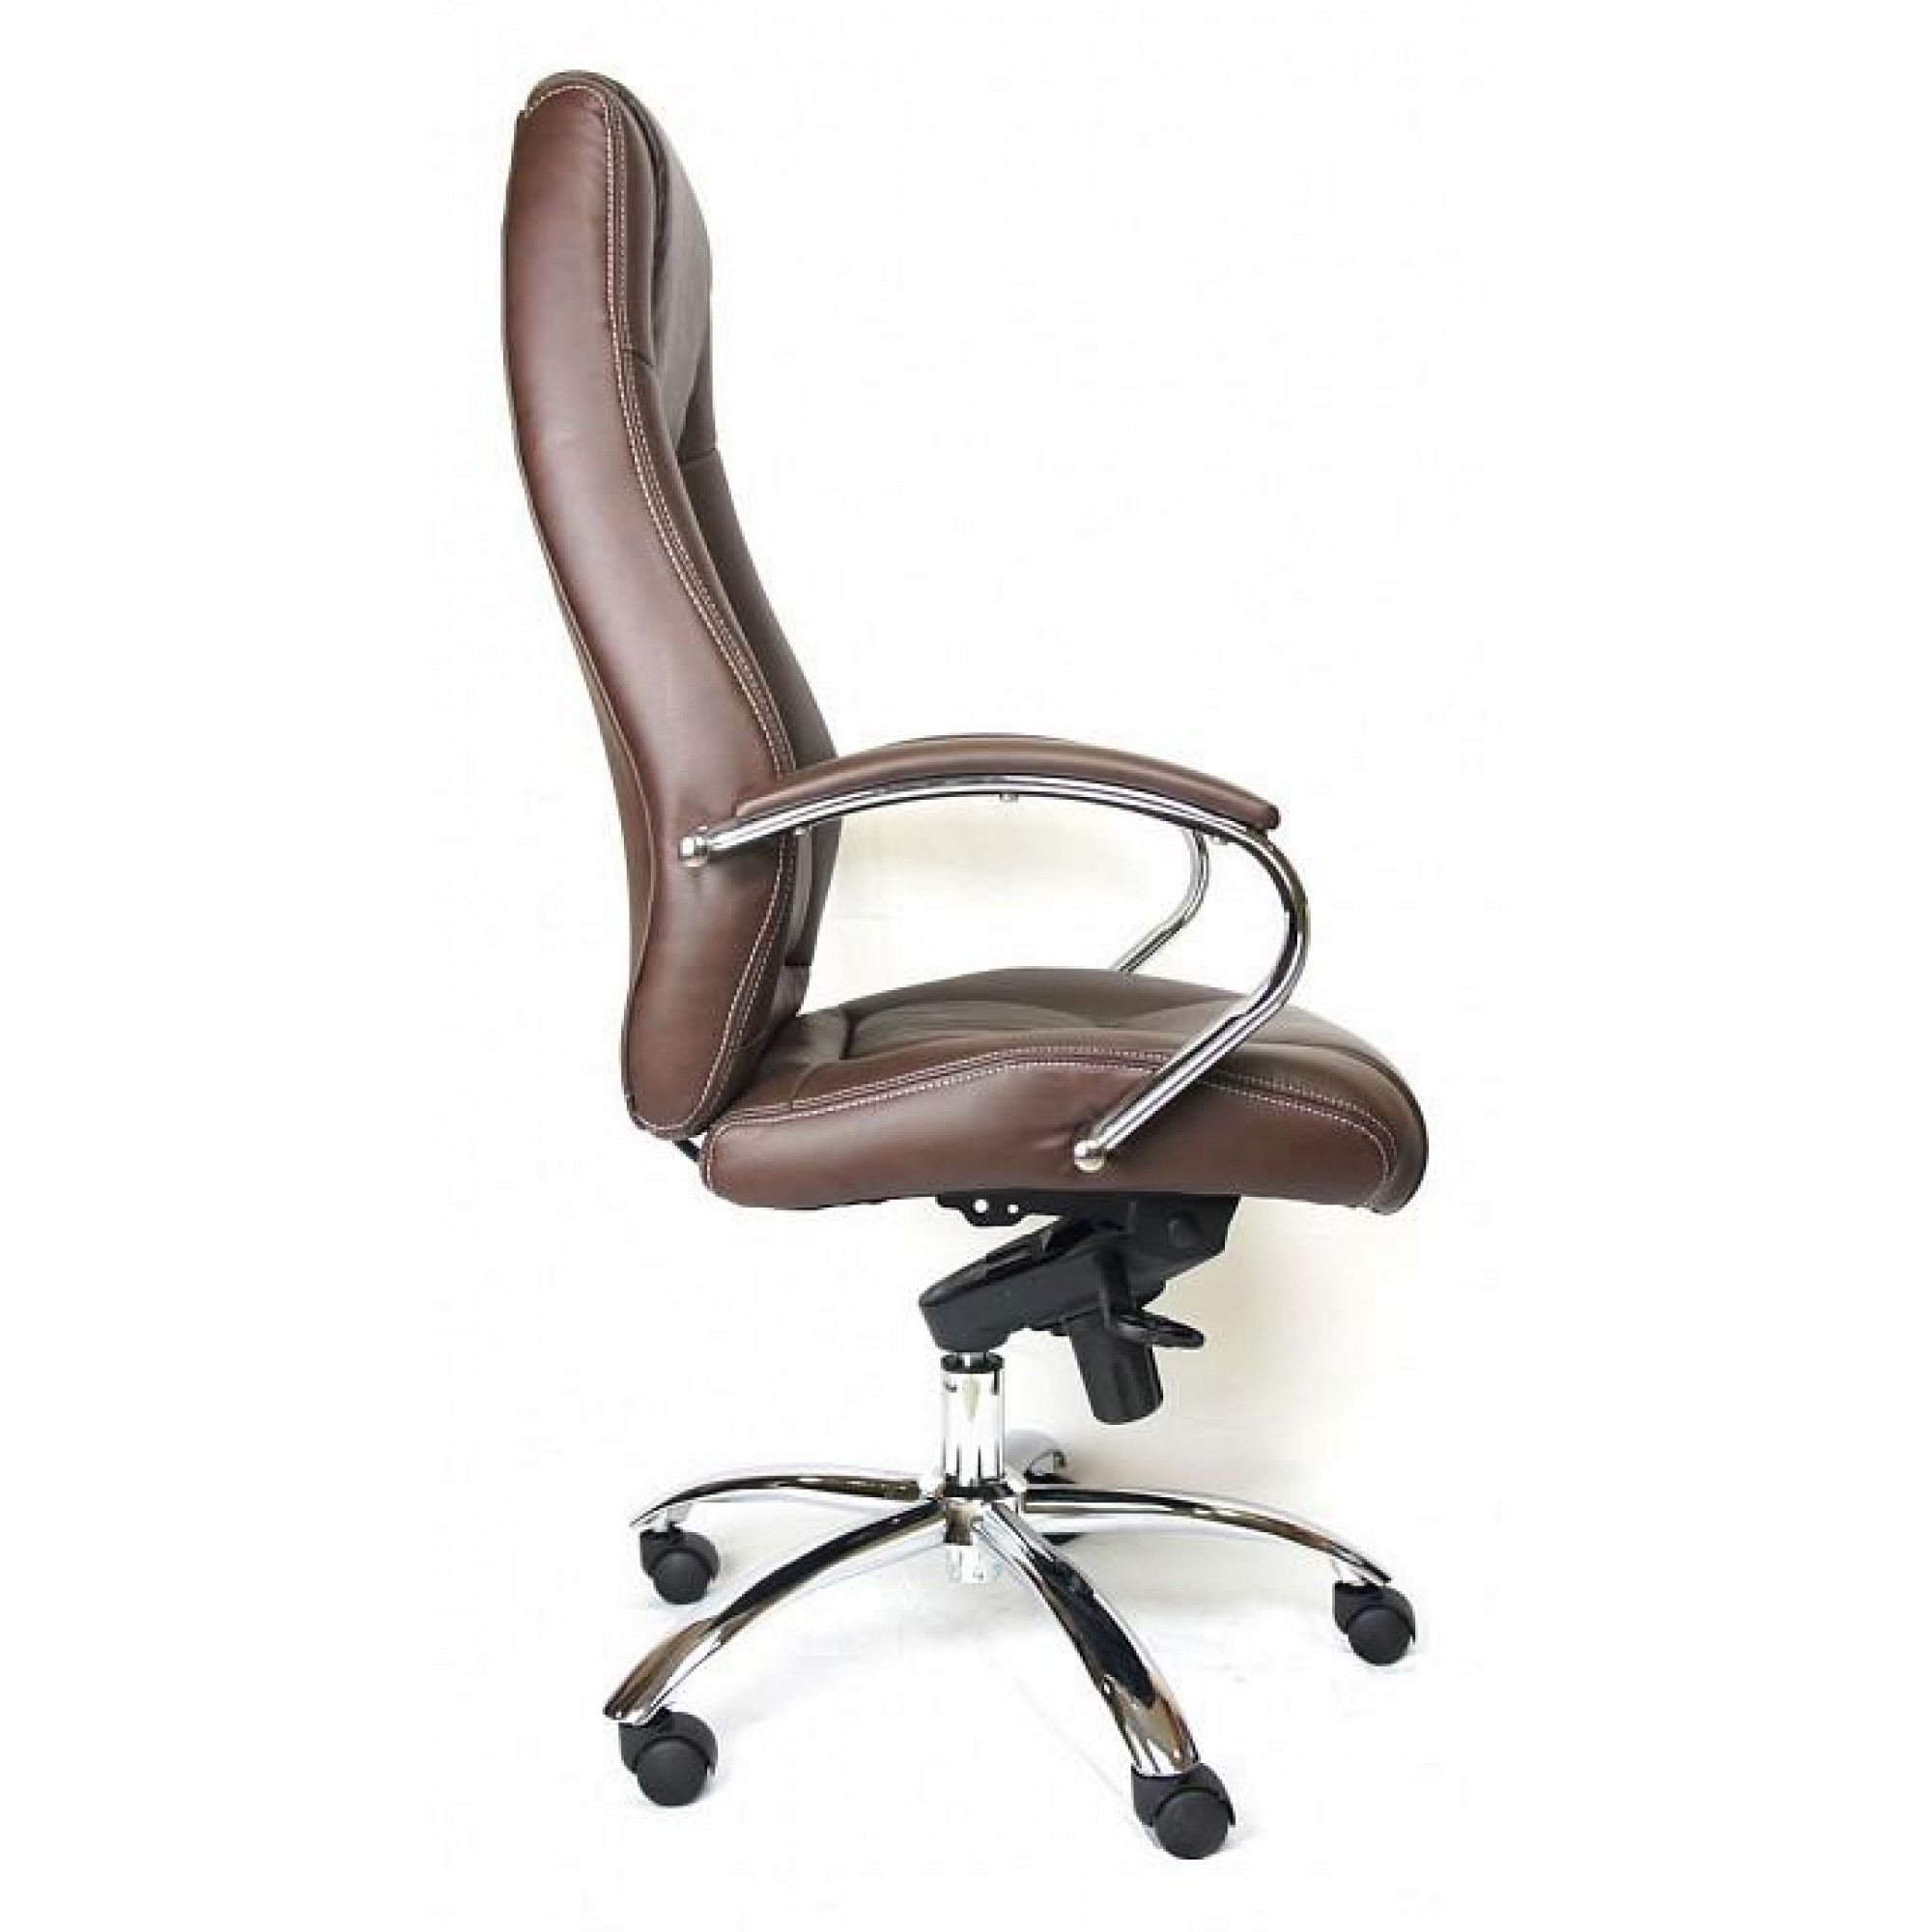 Кресло для руководителя Kron M EP-kron m eco brown    EVP_202501